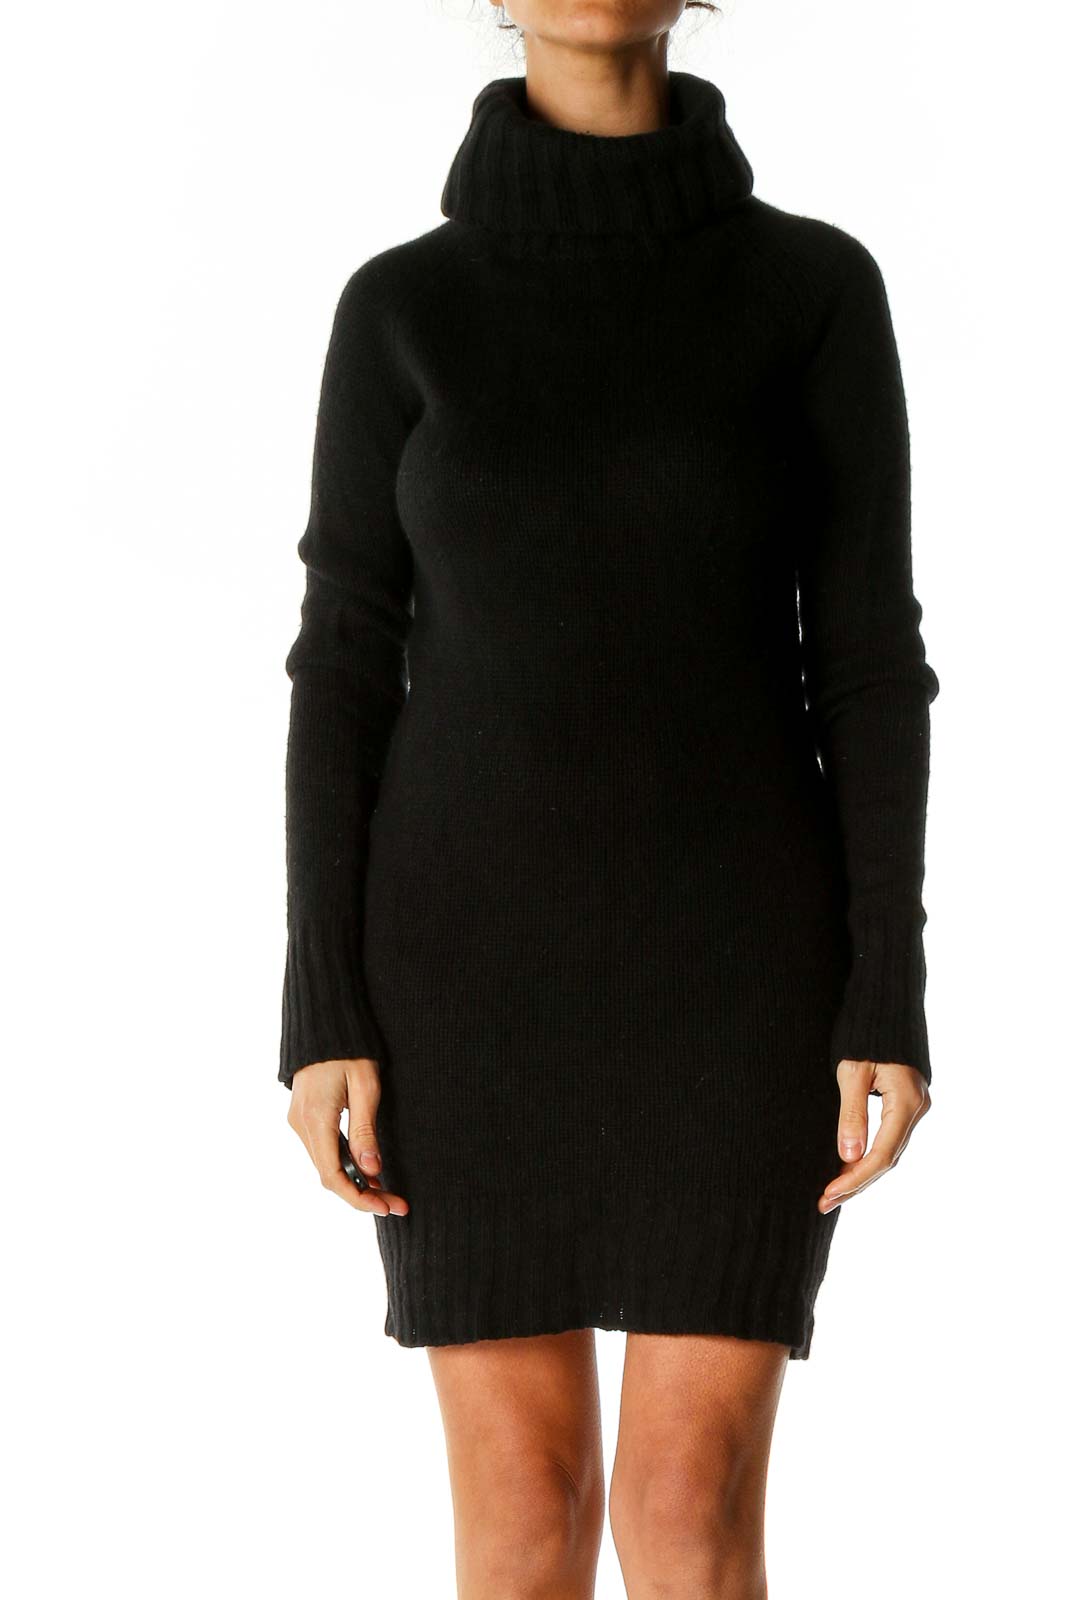 Theory - Black Textured Classic Sheath Dress Cashmere | SilkRoll